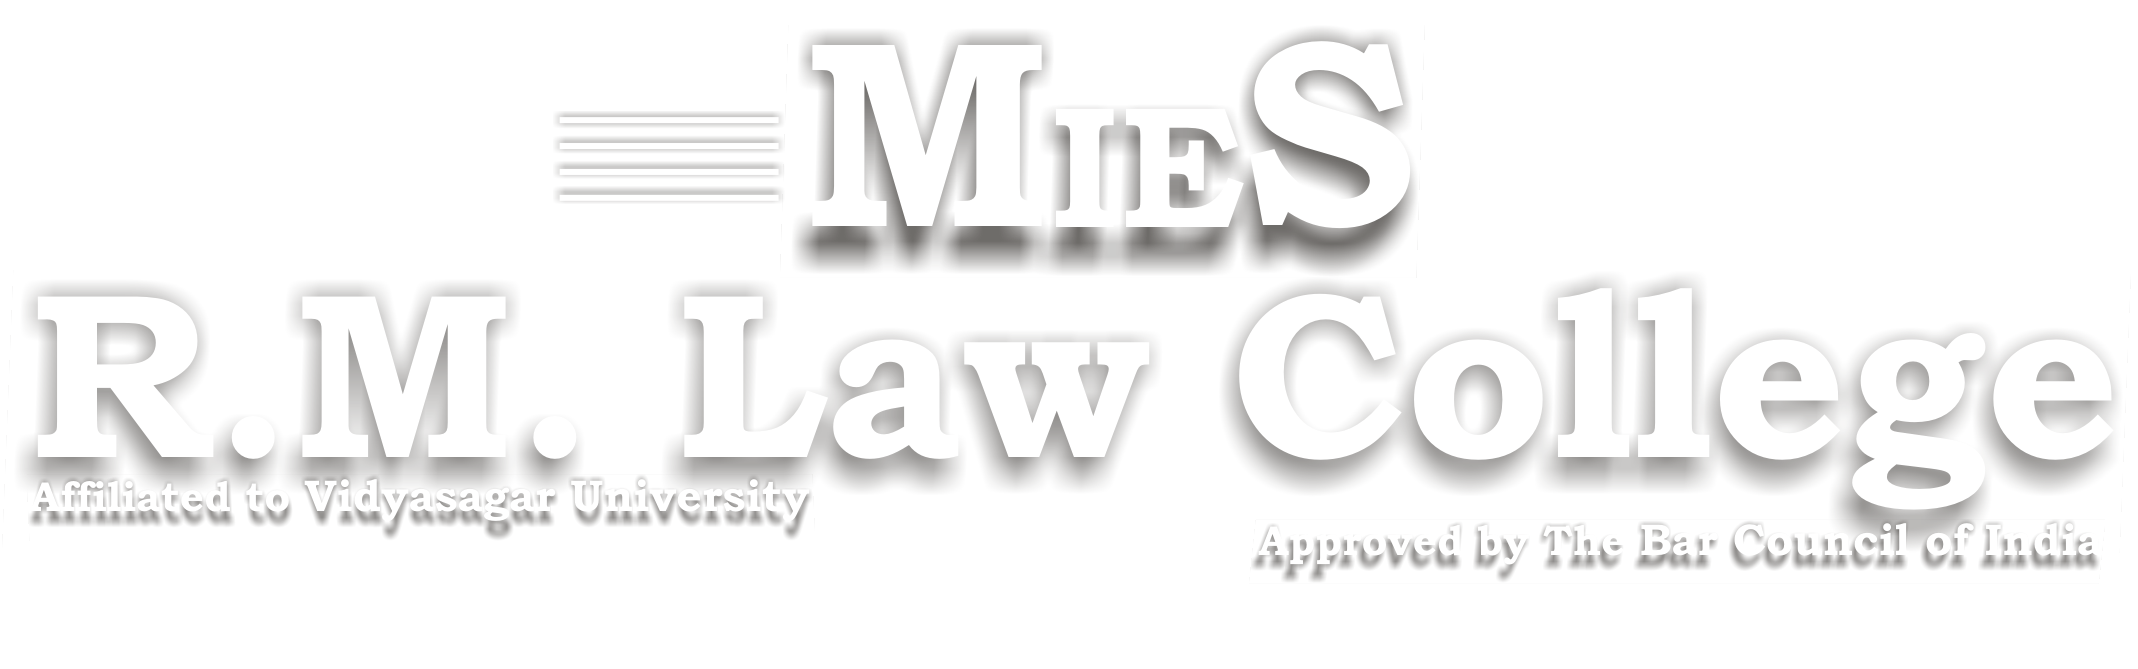 Mies RM Law College Name